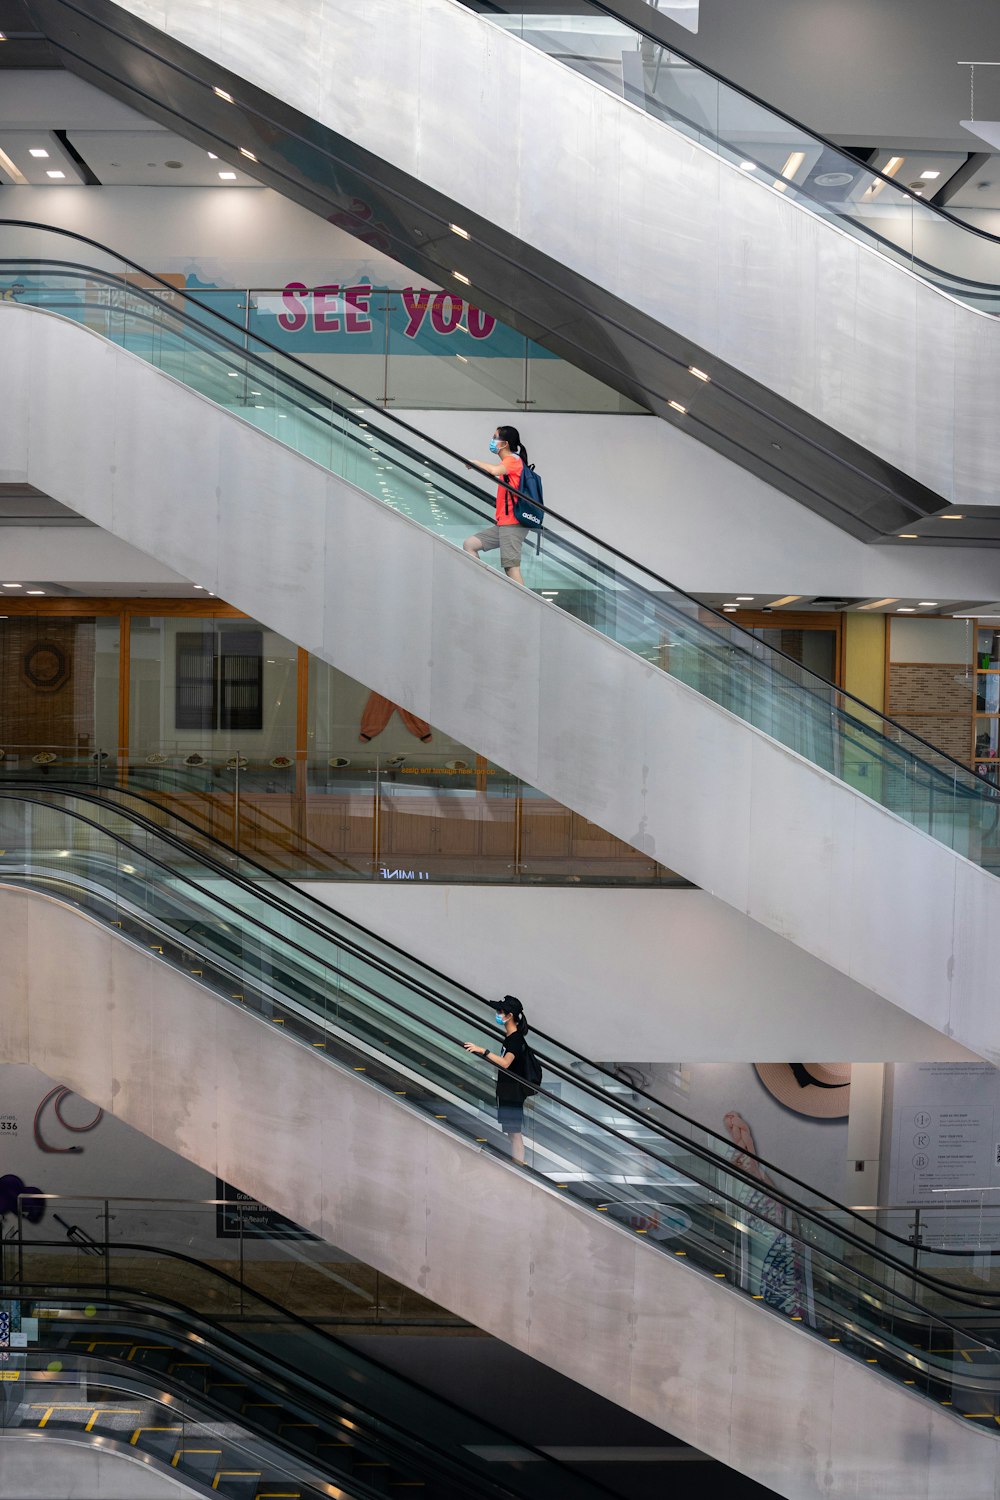 a woman is walking down an escalator in a building